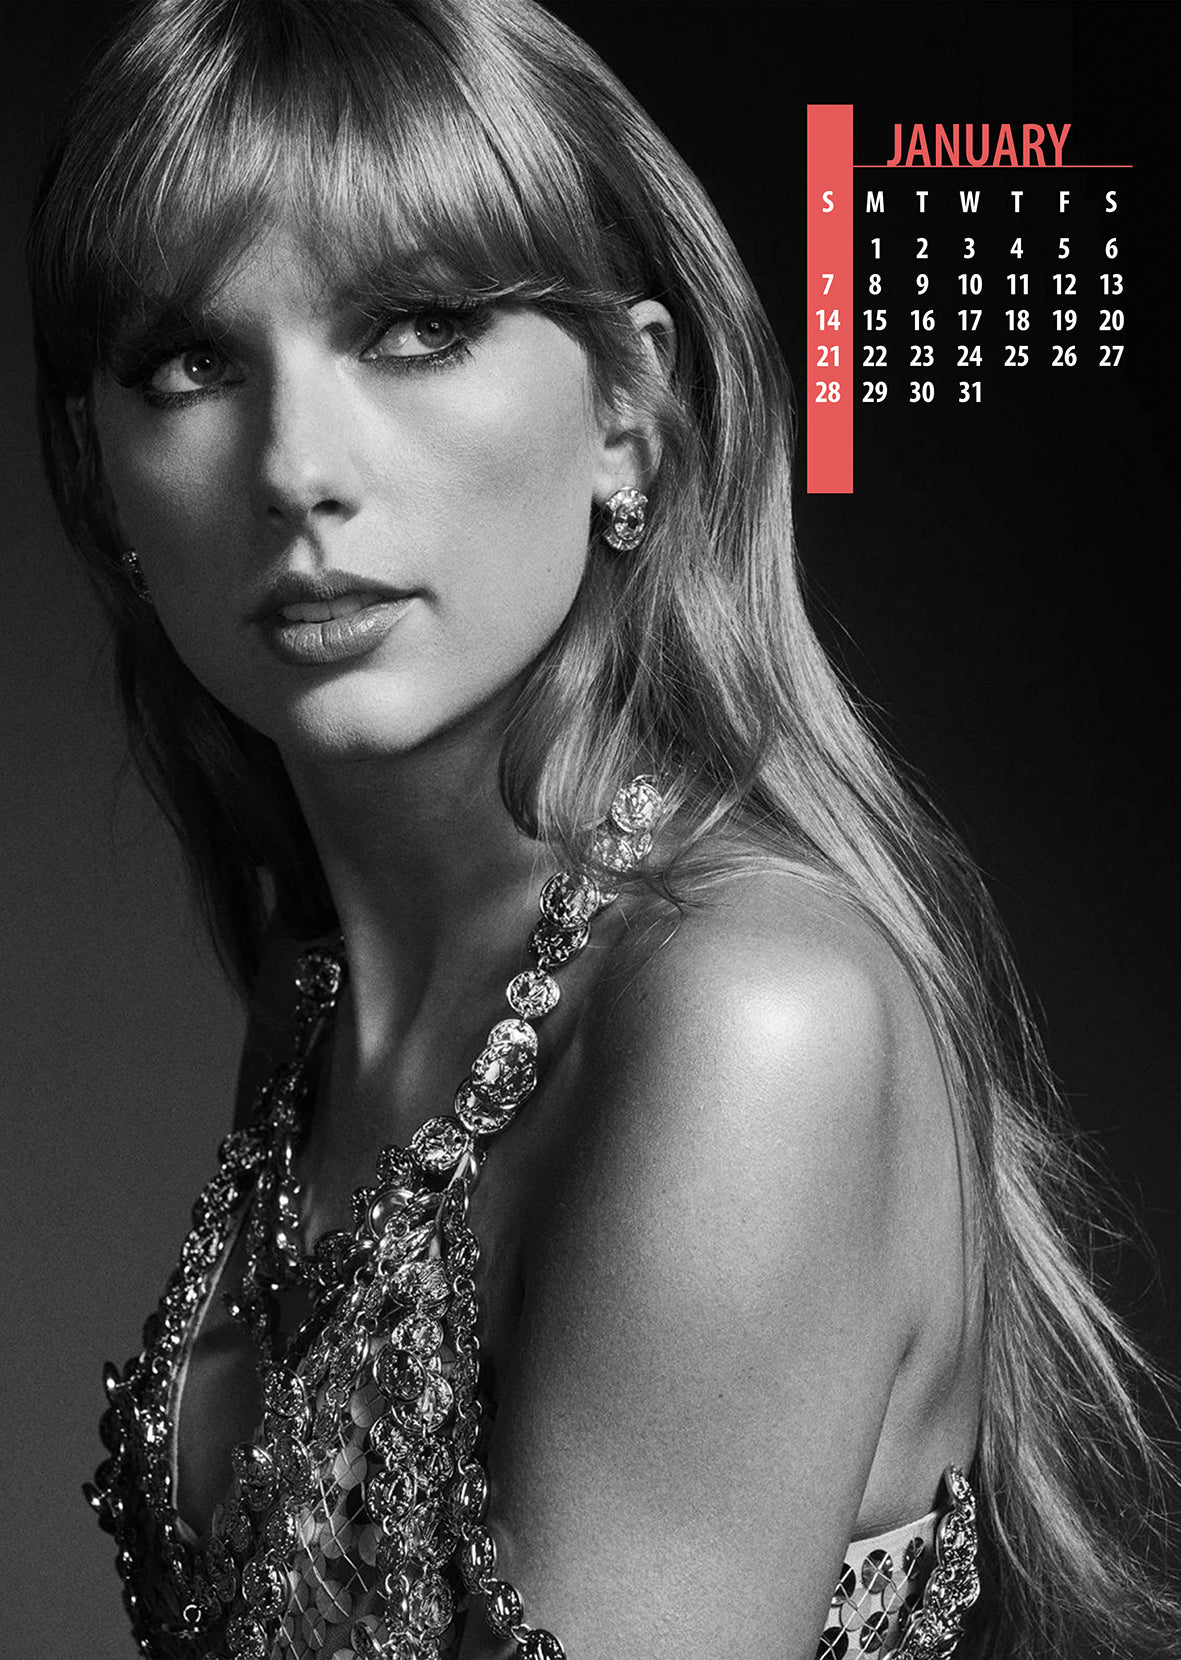 Swiftie Fall calendar : r/TaylorSwift